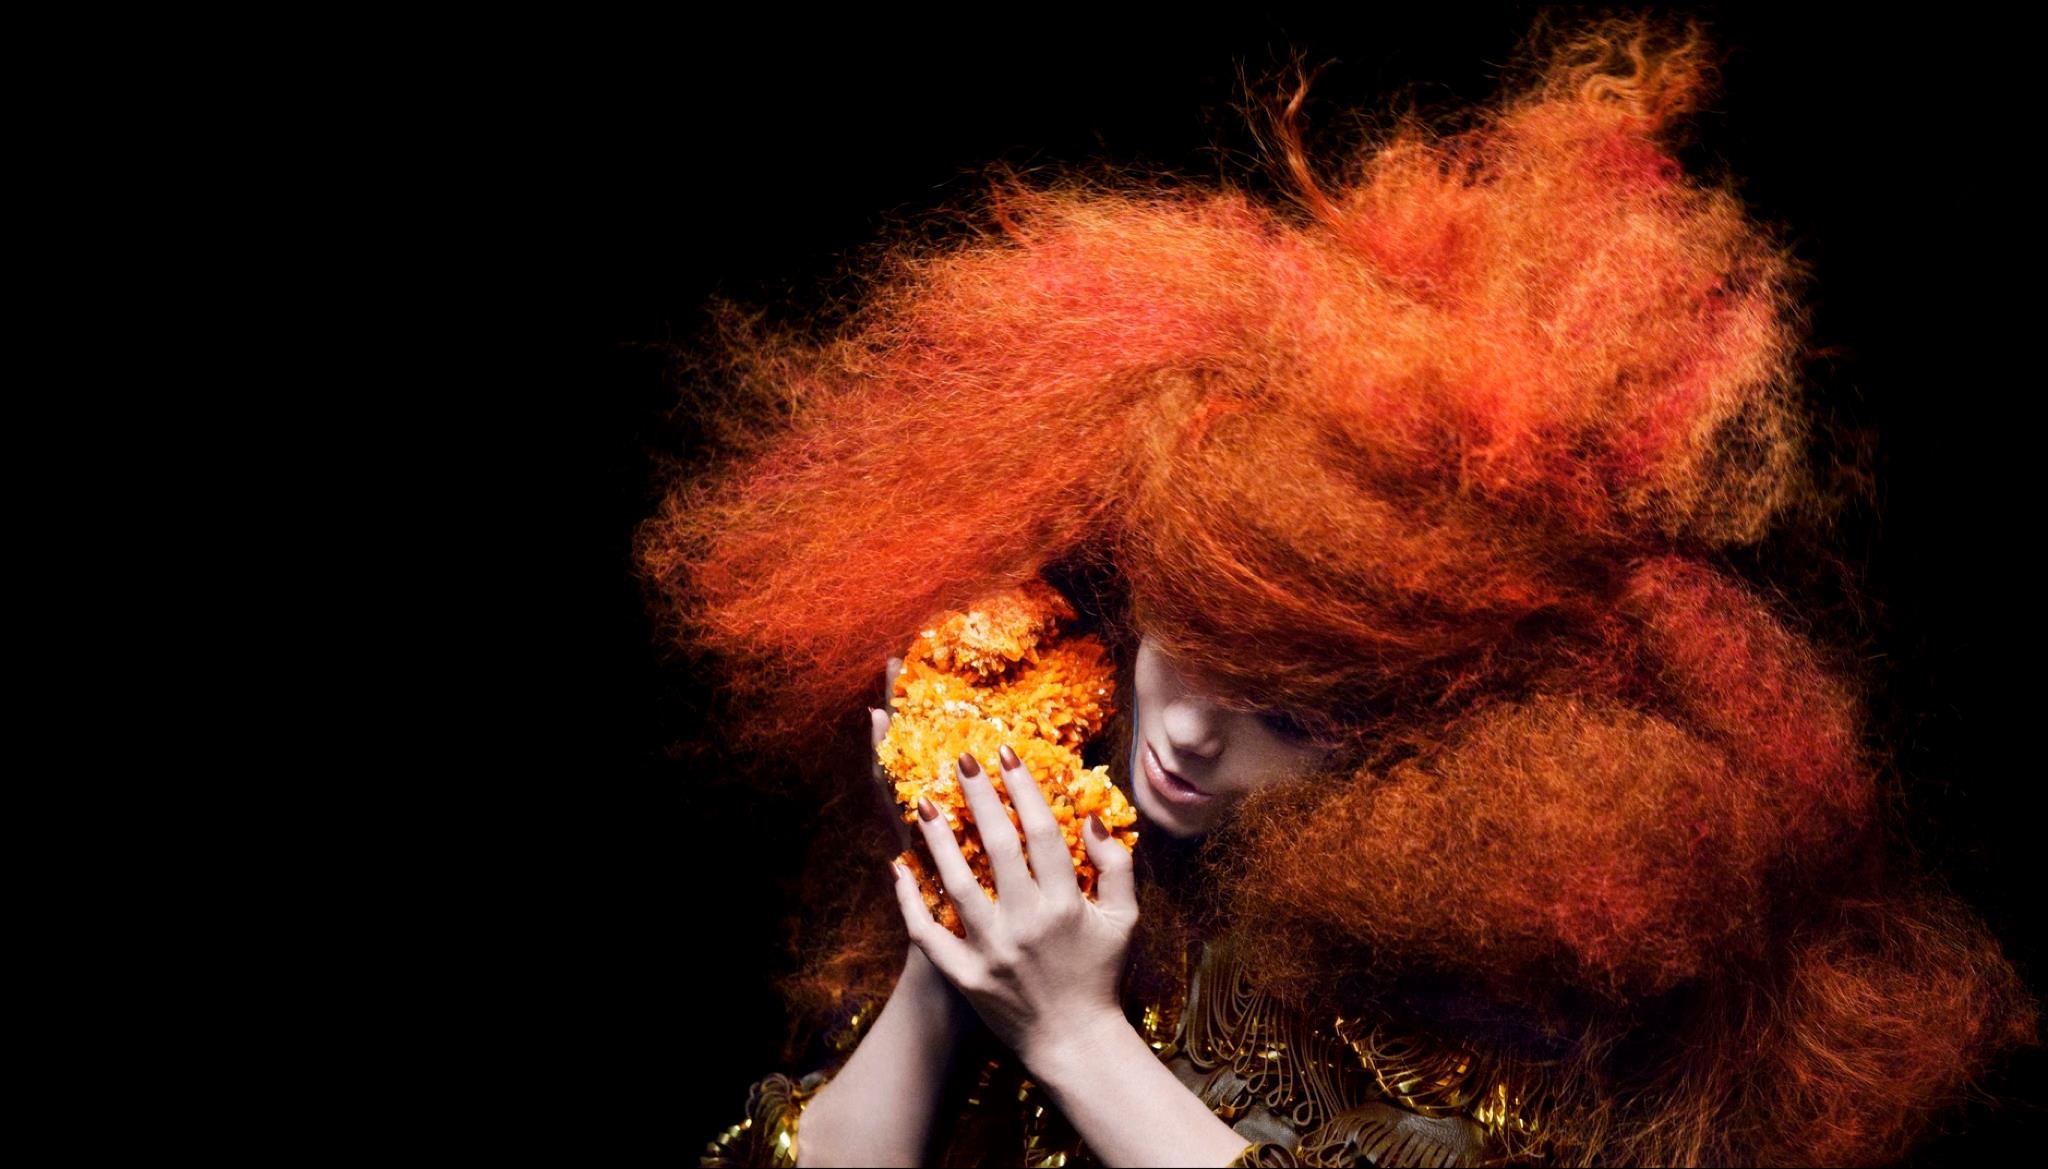 Björk Collaborating with The Haxan Cloak on New Album